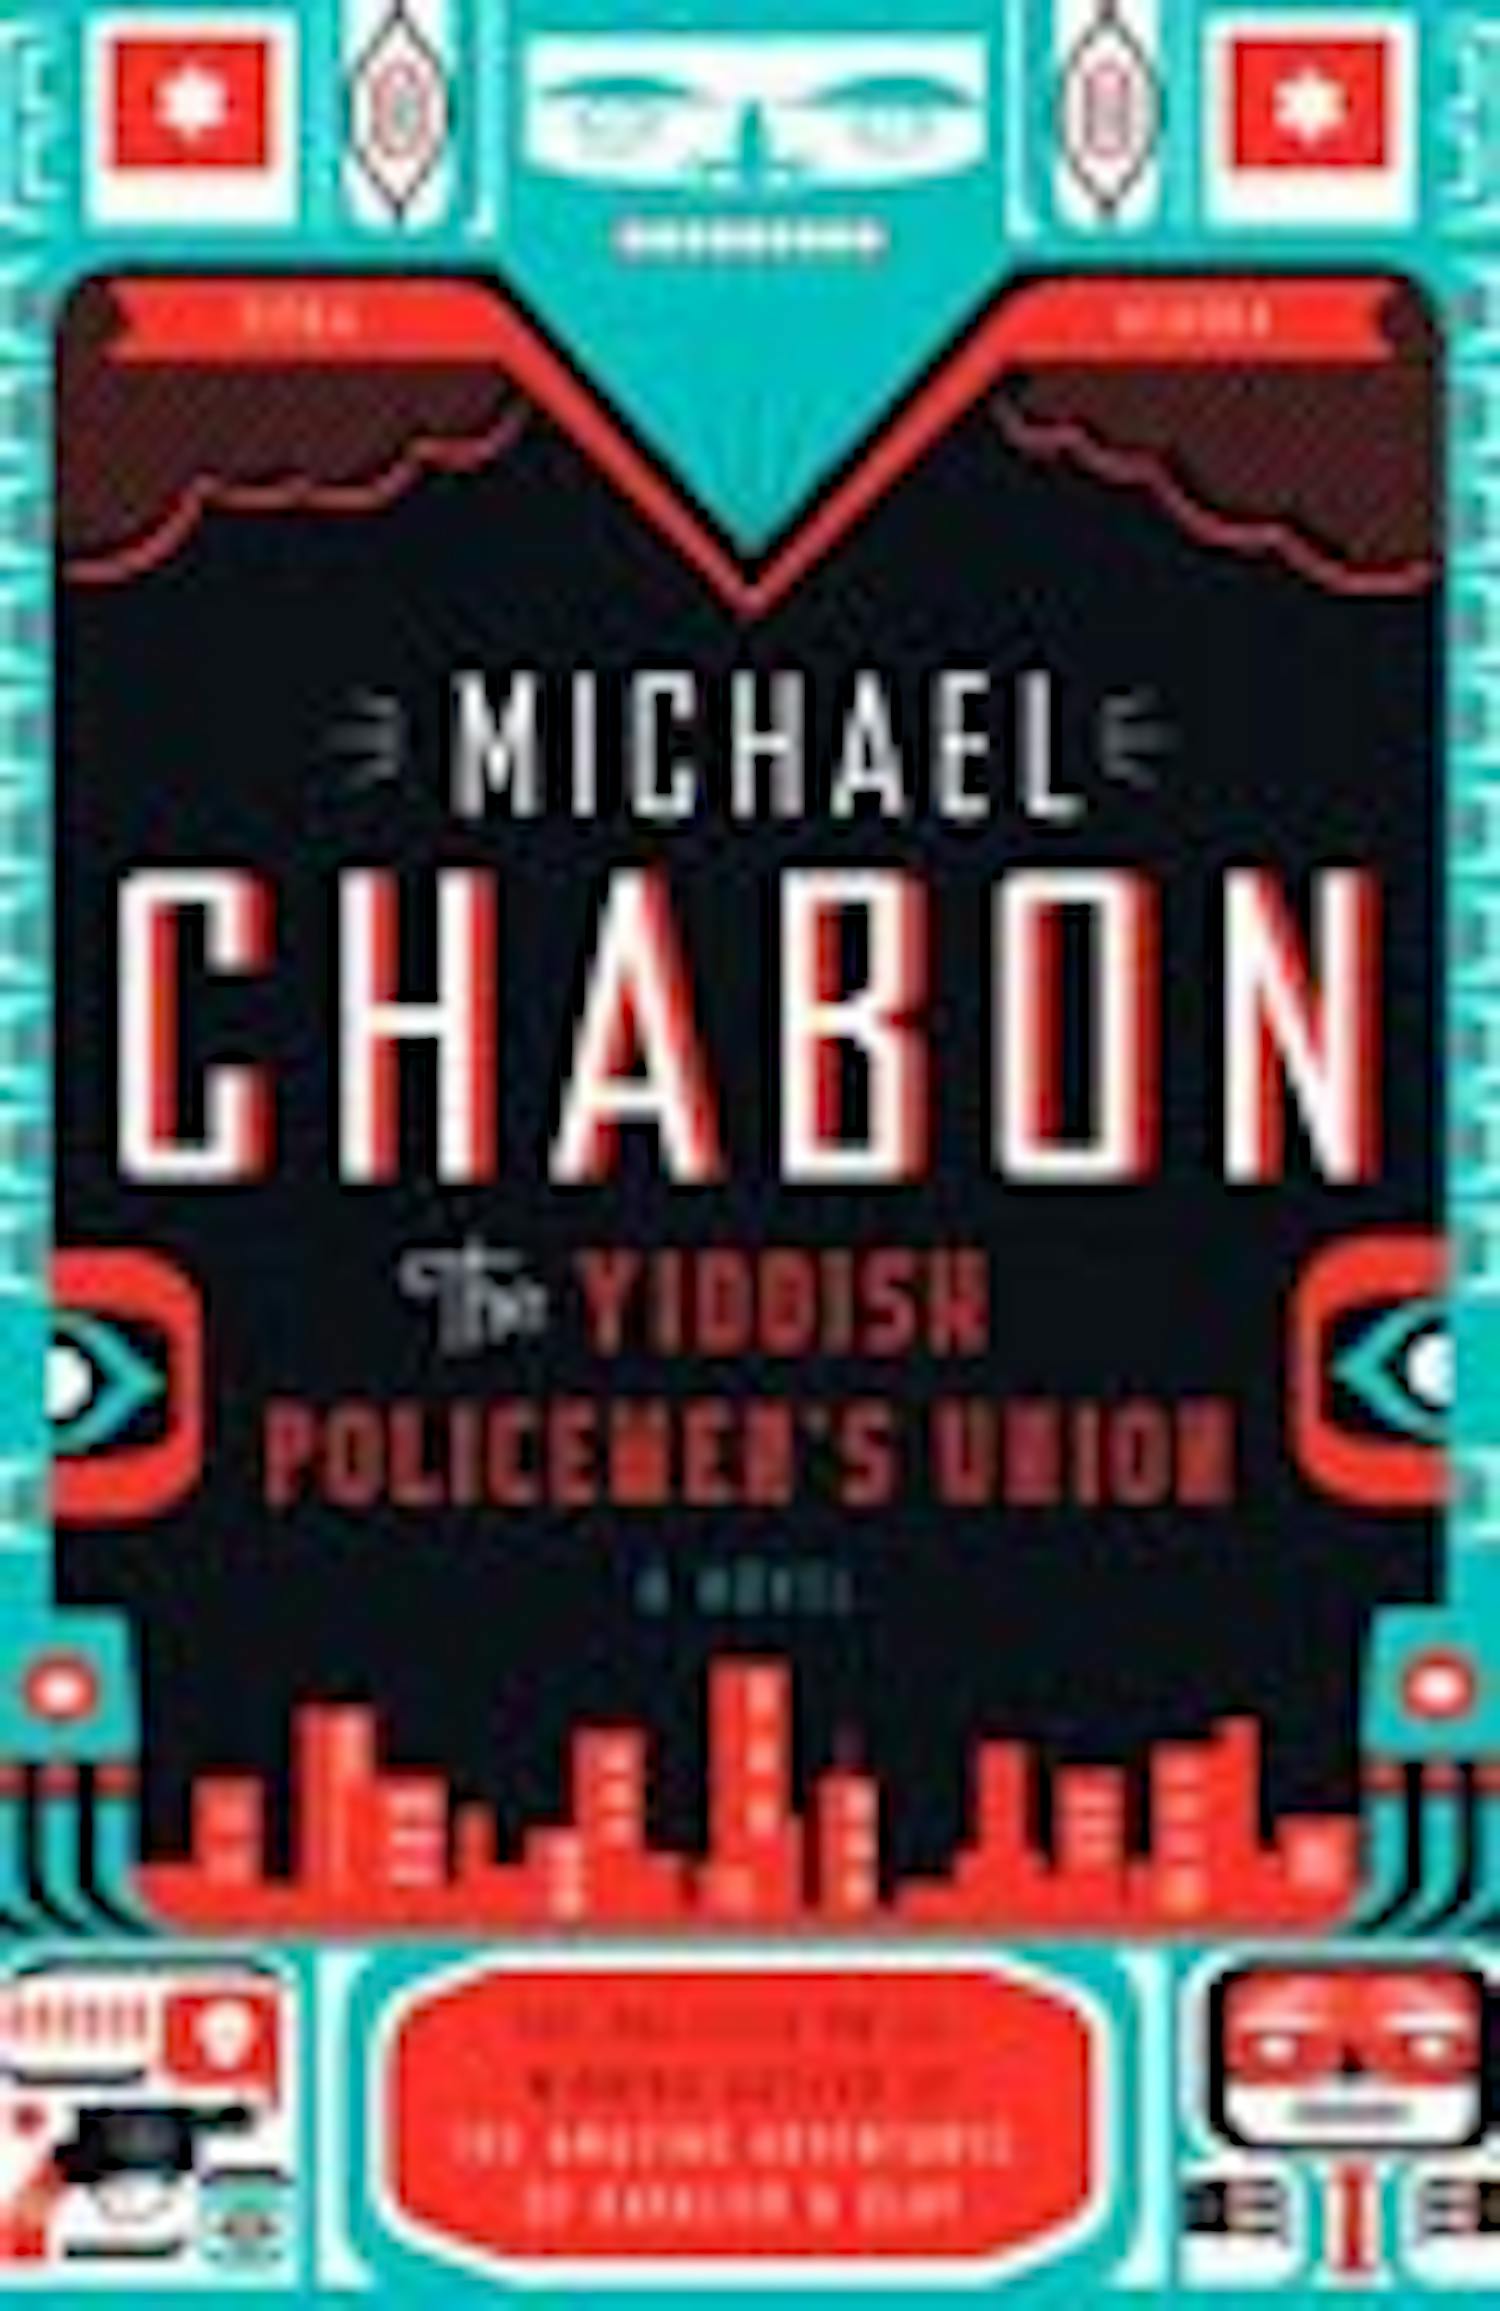 Oy Vey: Chabon putzes around with 'Policemen's Union'